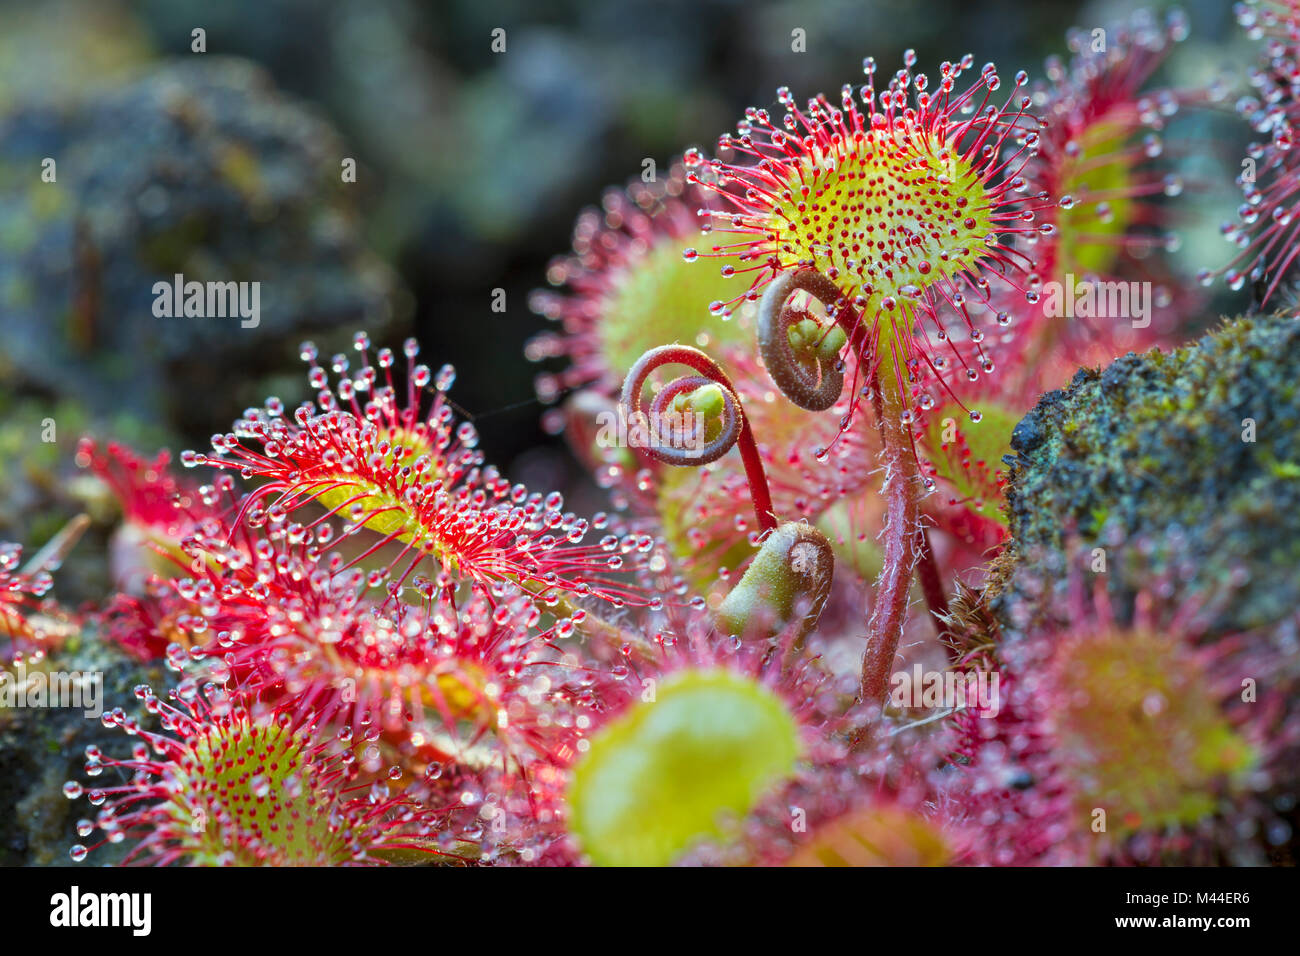 Round-lasciava Sundew (drosera rotundifolia). Foglie con tentacoli. Germania Foto Stock